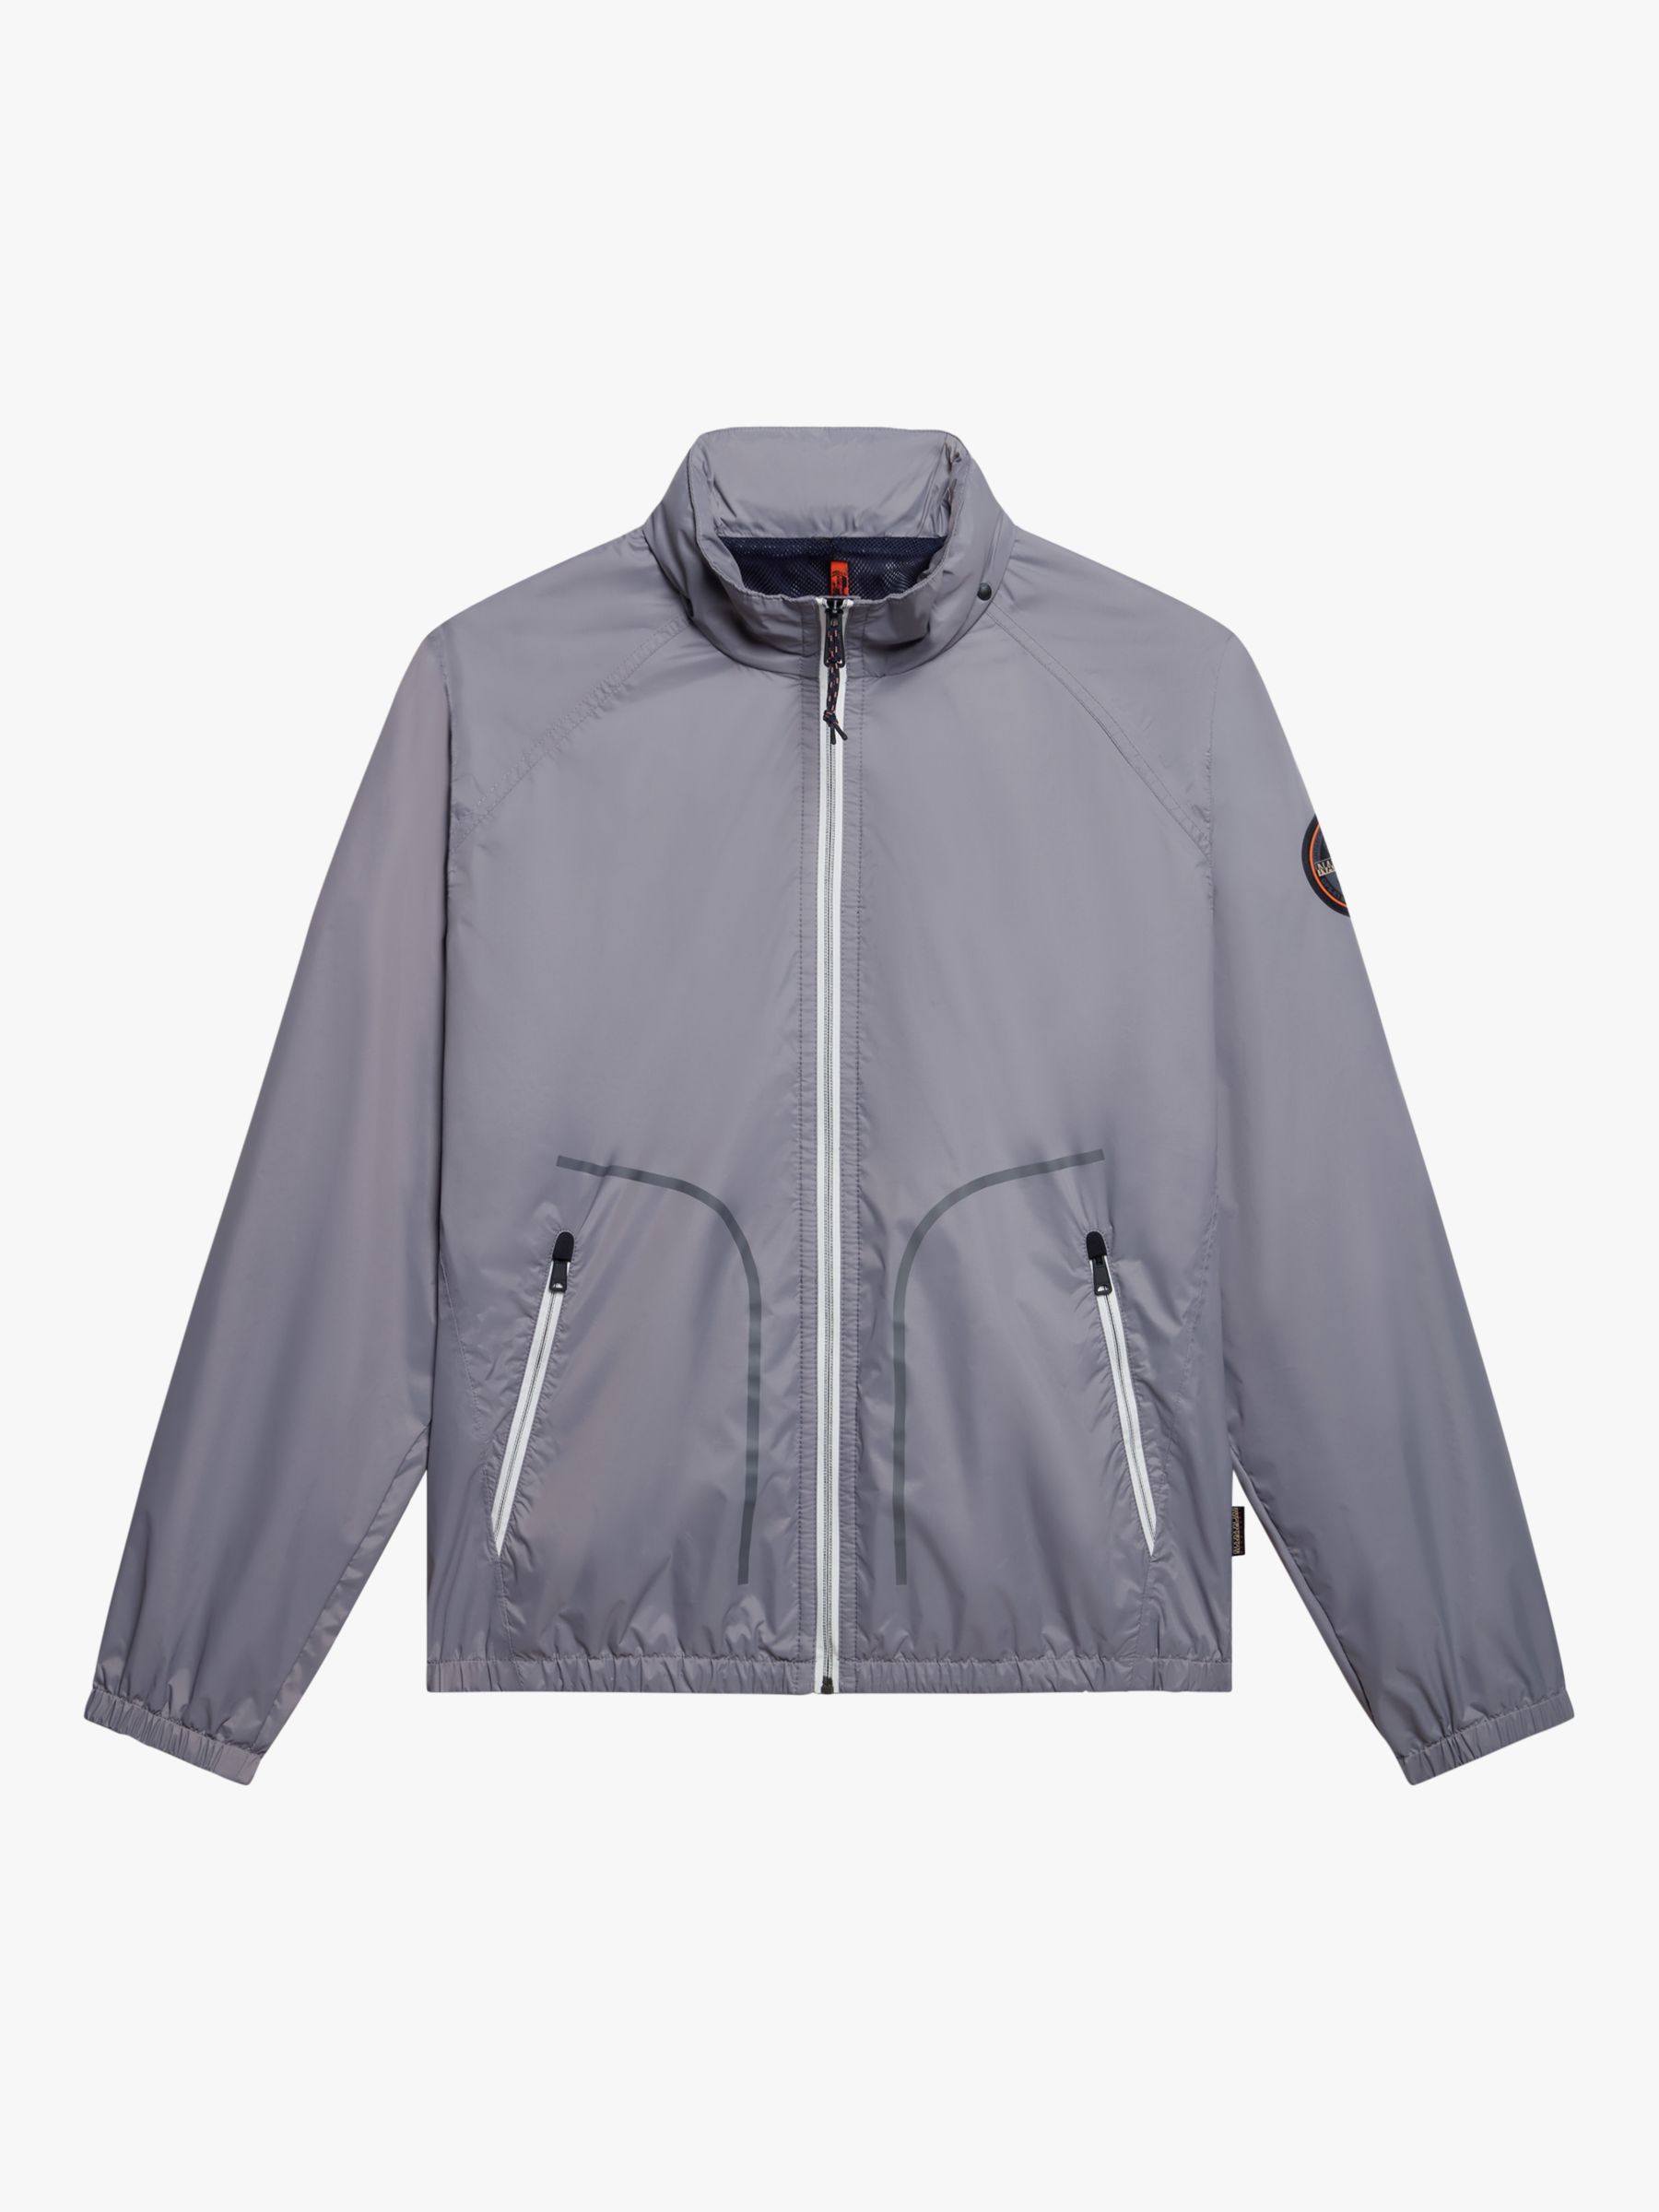 Napapijri Cloudy Windbreaker Jacket, Grey Owl, XXL